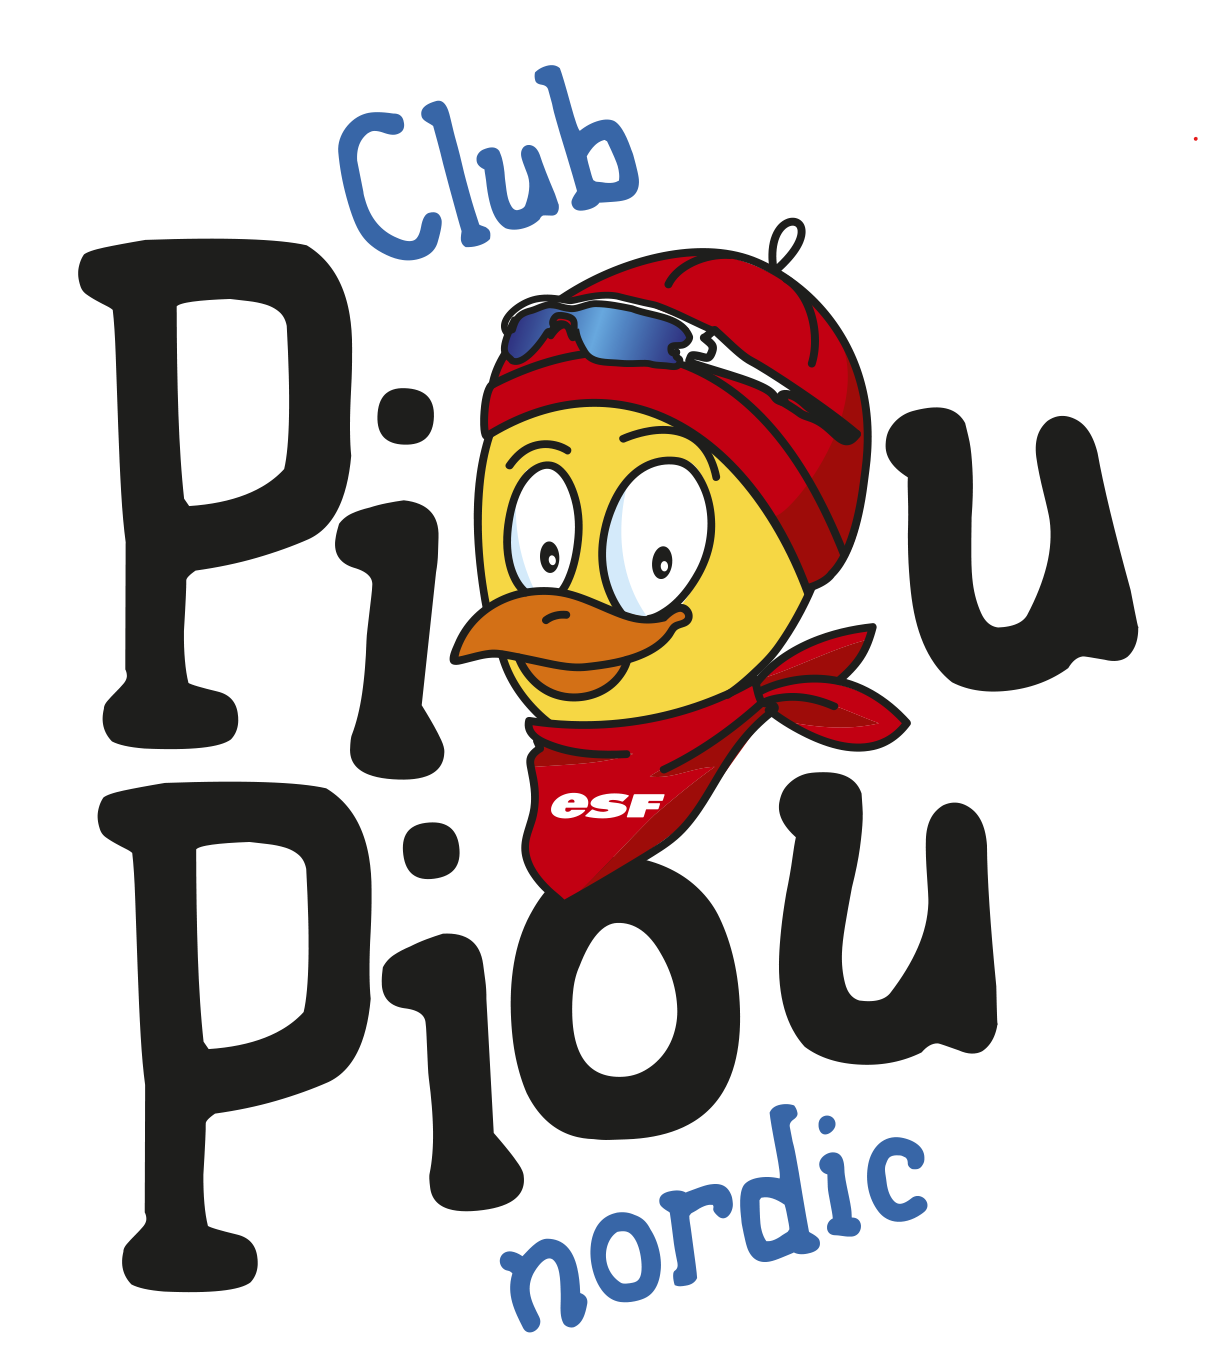 Piou-Piou nordic club course